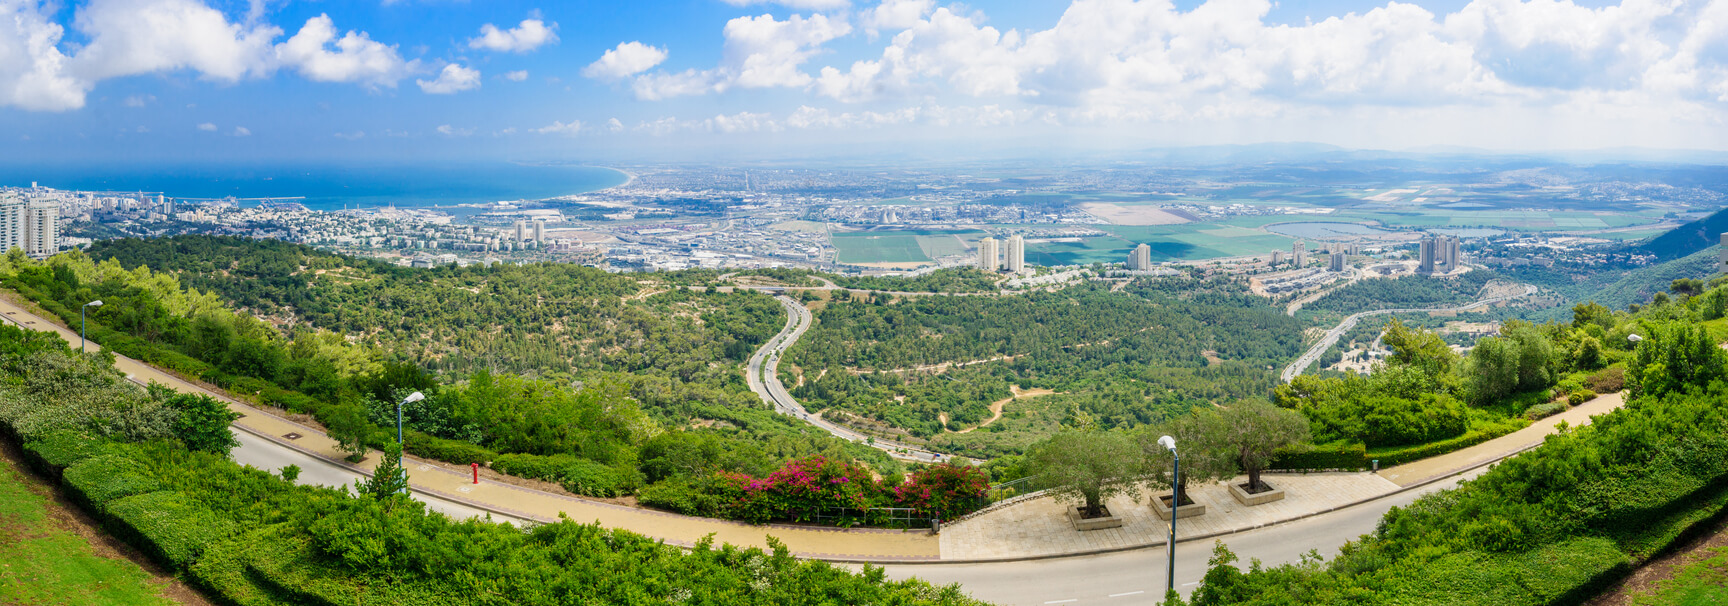 A Panoramic view of Haifa viewed from the Haifa University campus.